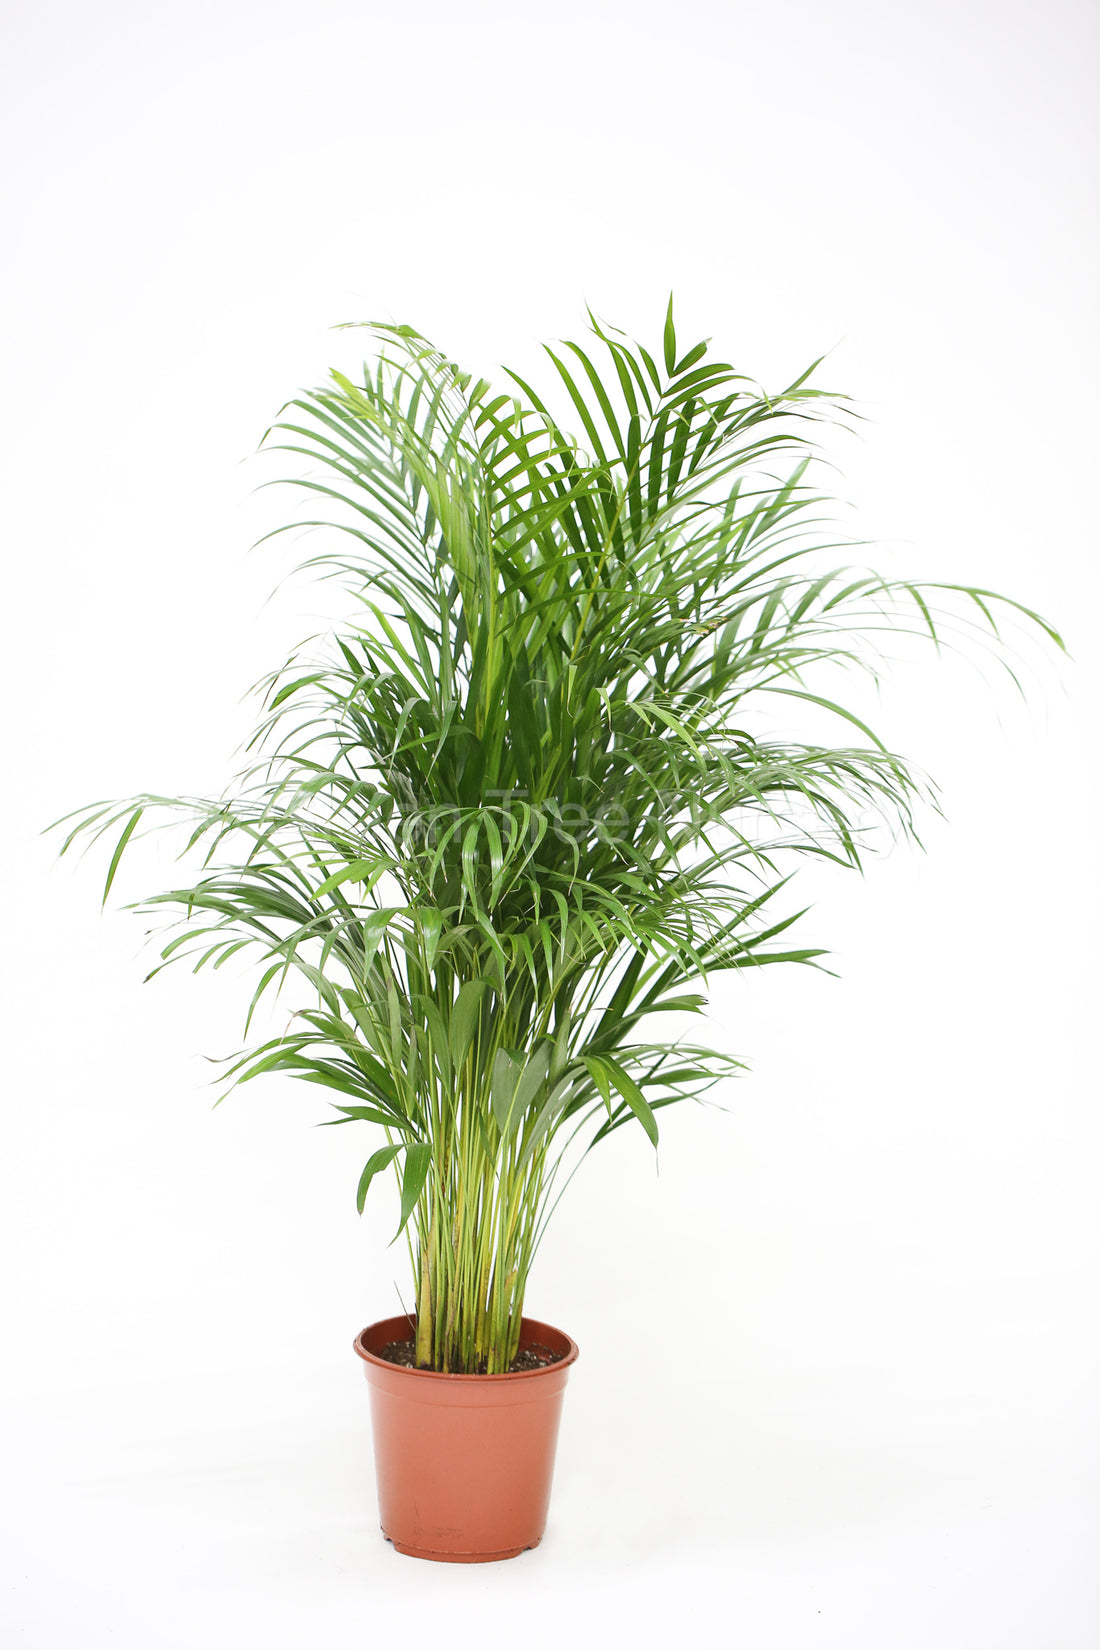 Dypsis Lutescens (Areca Palm) 90 cm